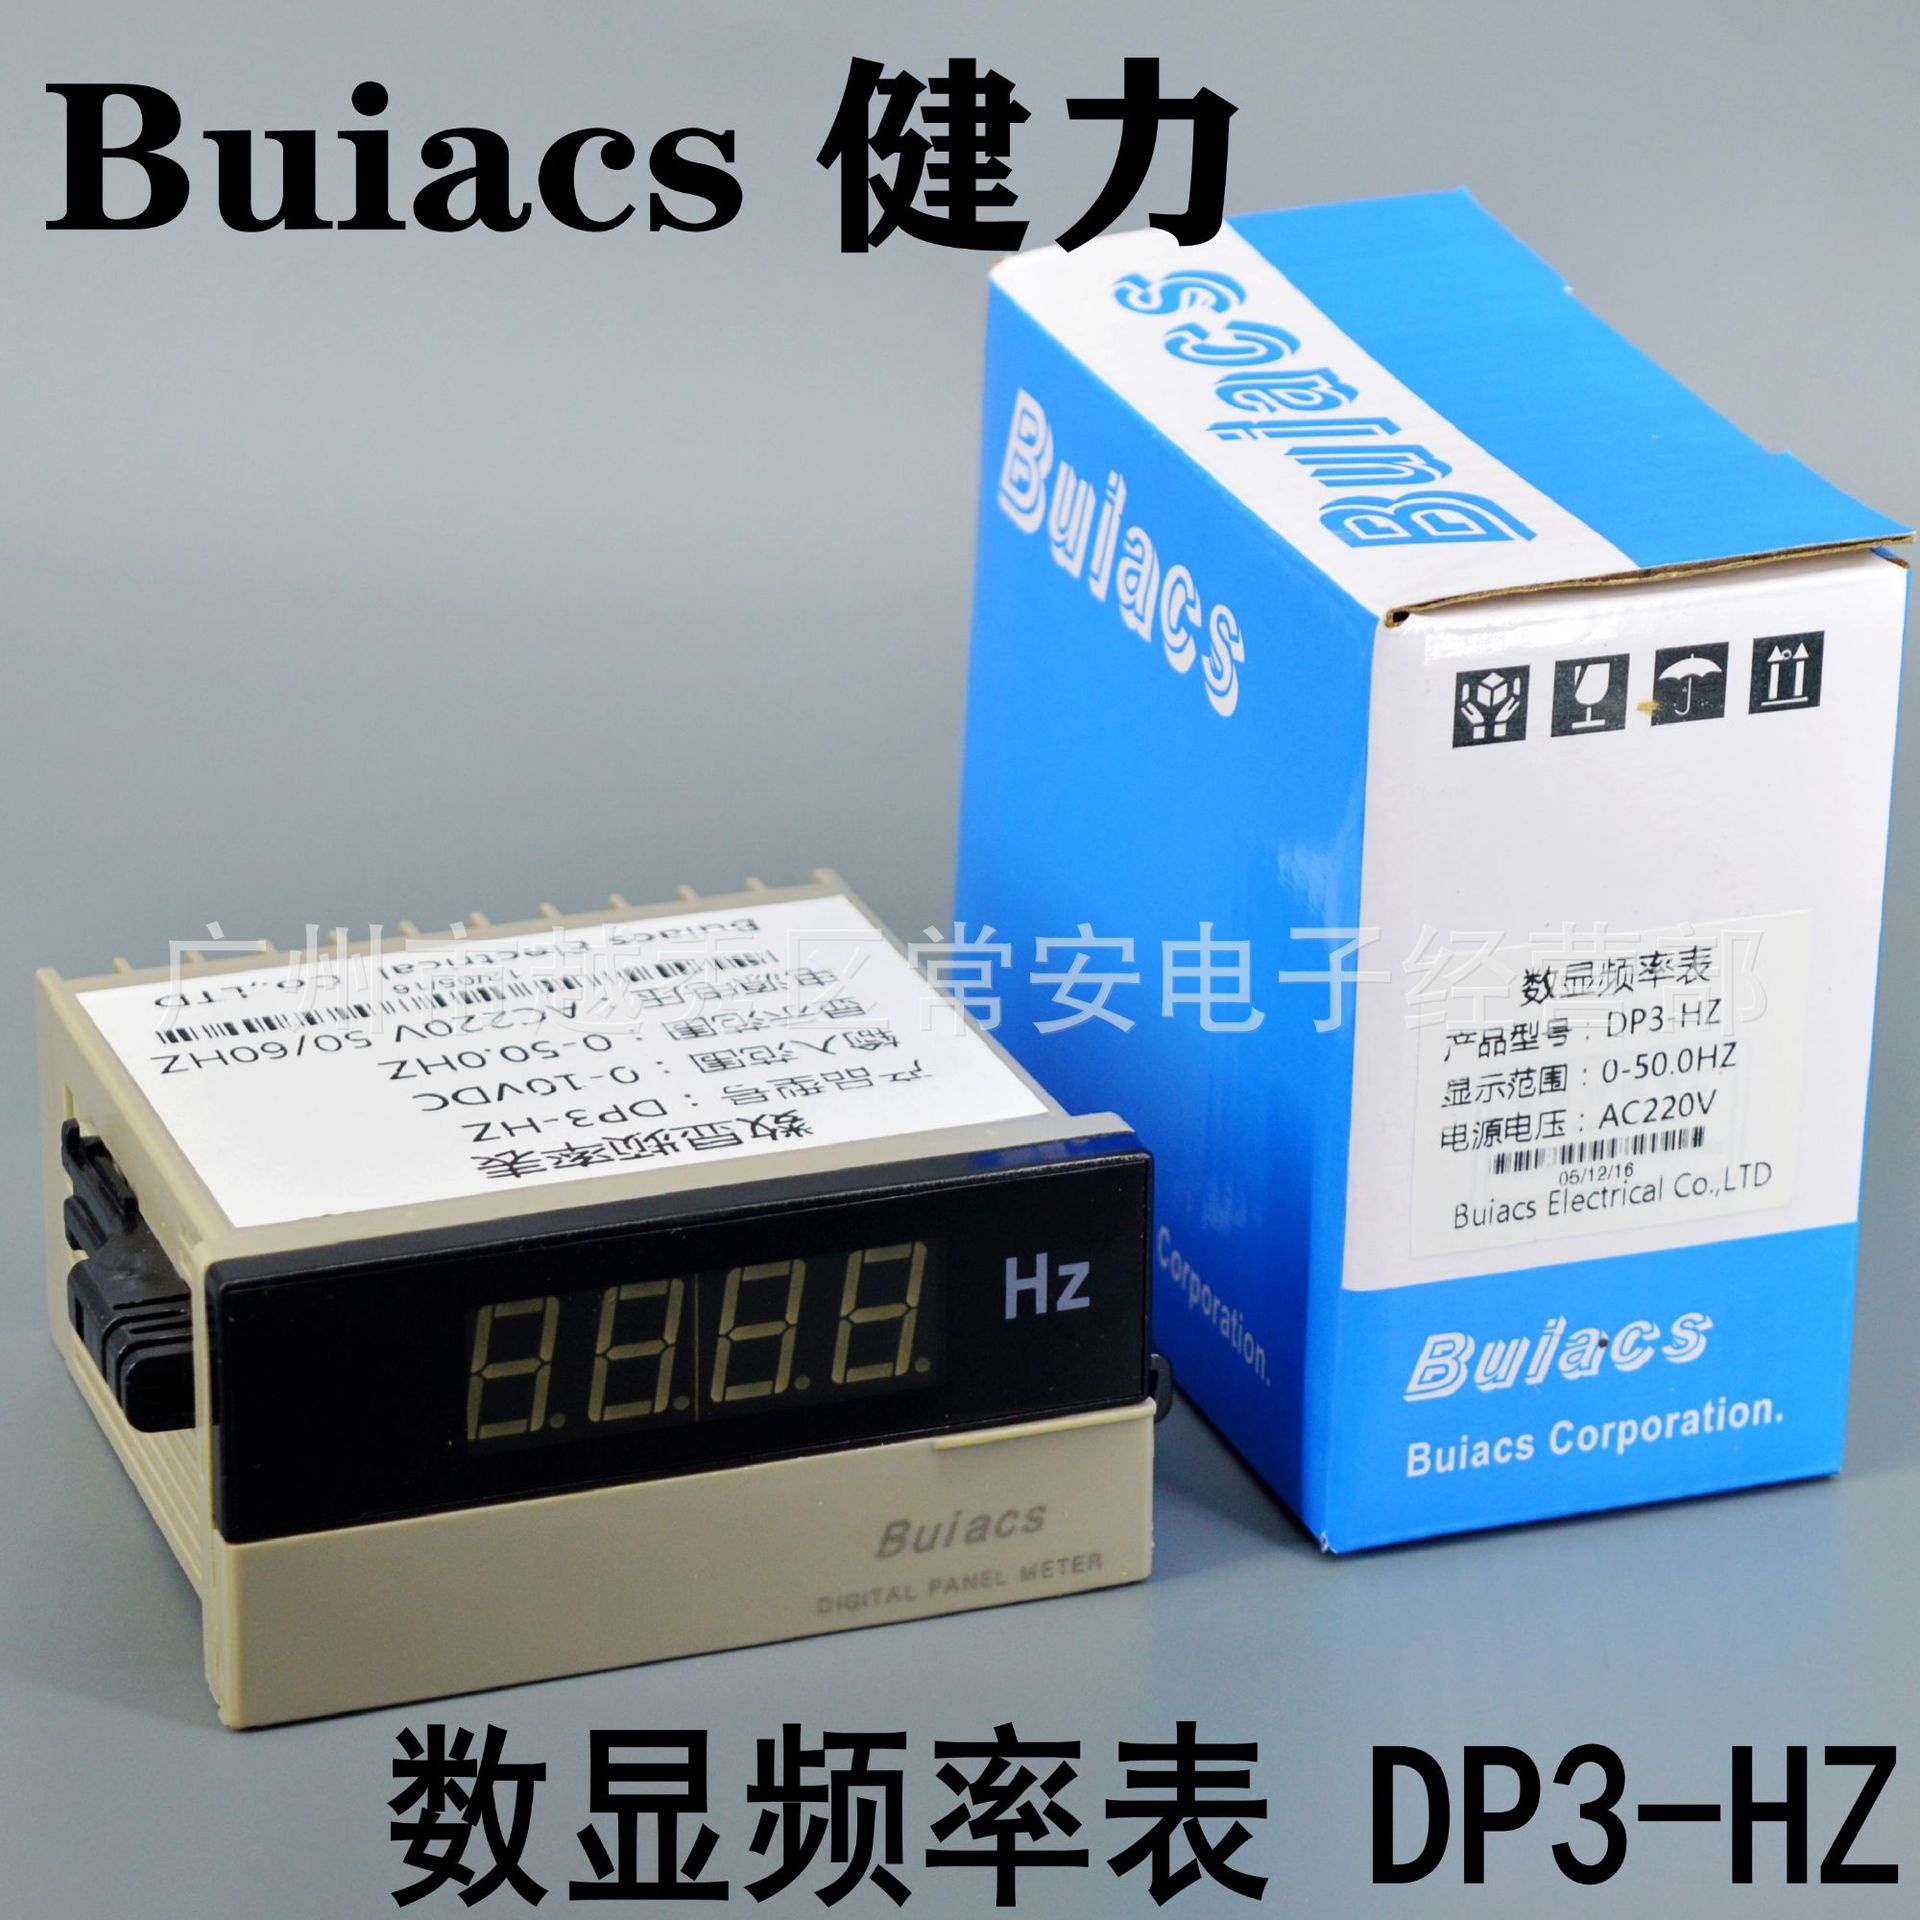 Buiacs 中山健力 变频器专用 数显频率表 DP3-HZ